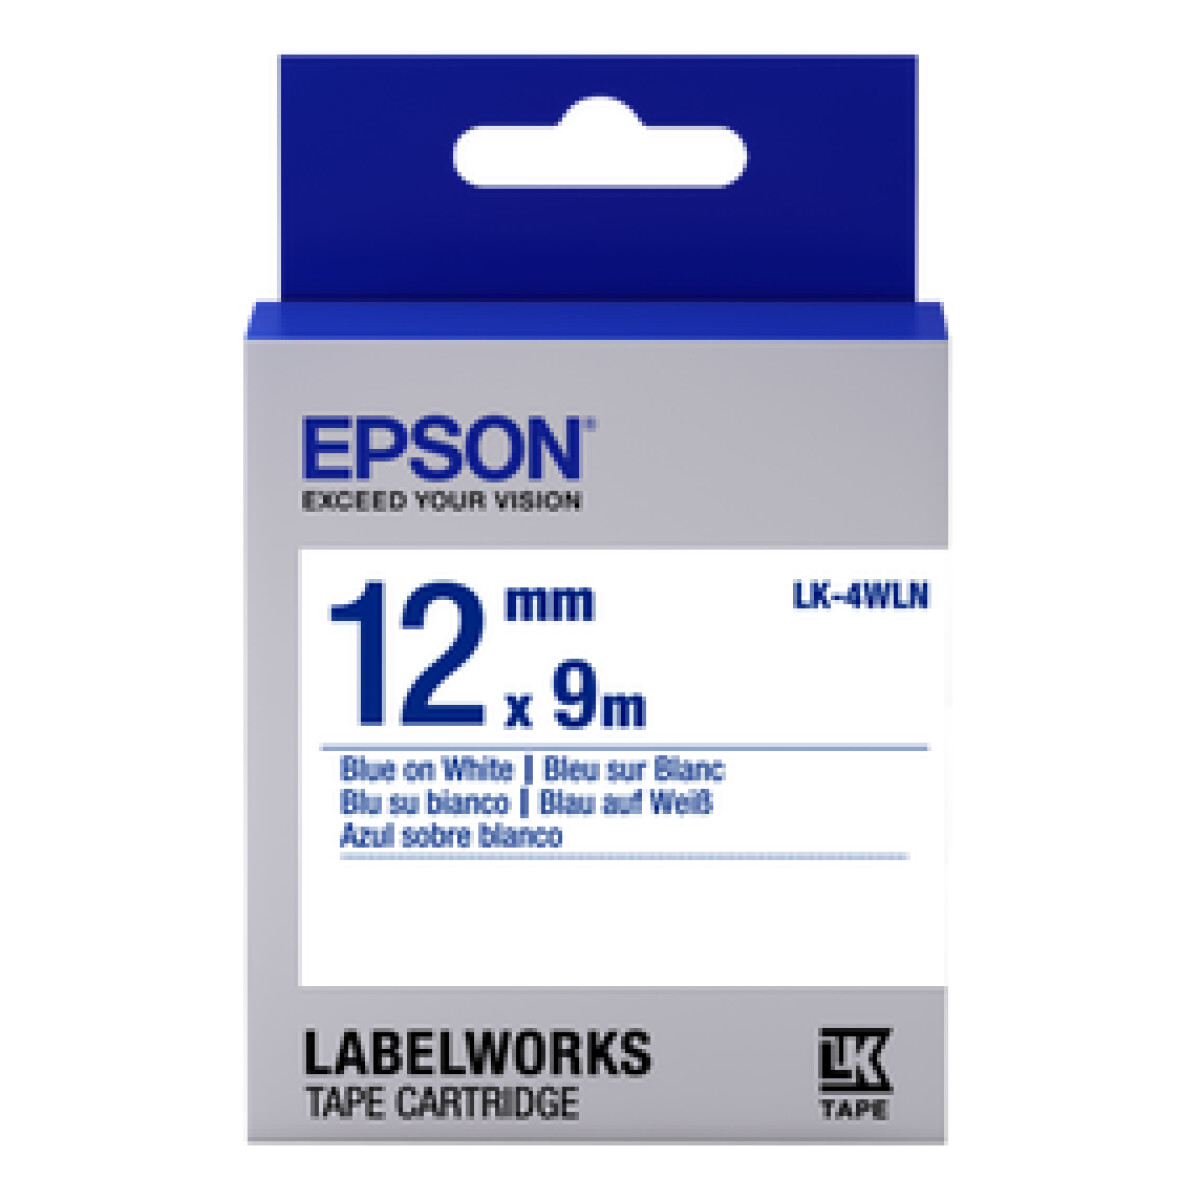 Epson LK-4WLN - 12 mm. Standaard Label - Blauw op Wit